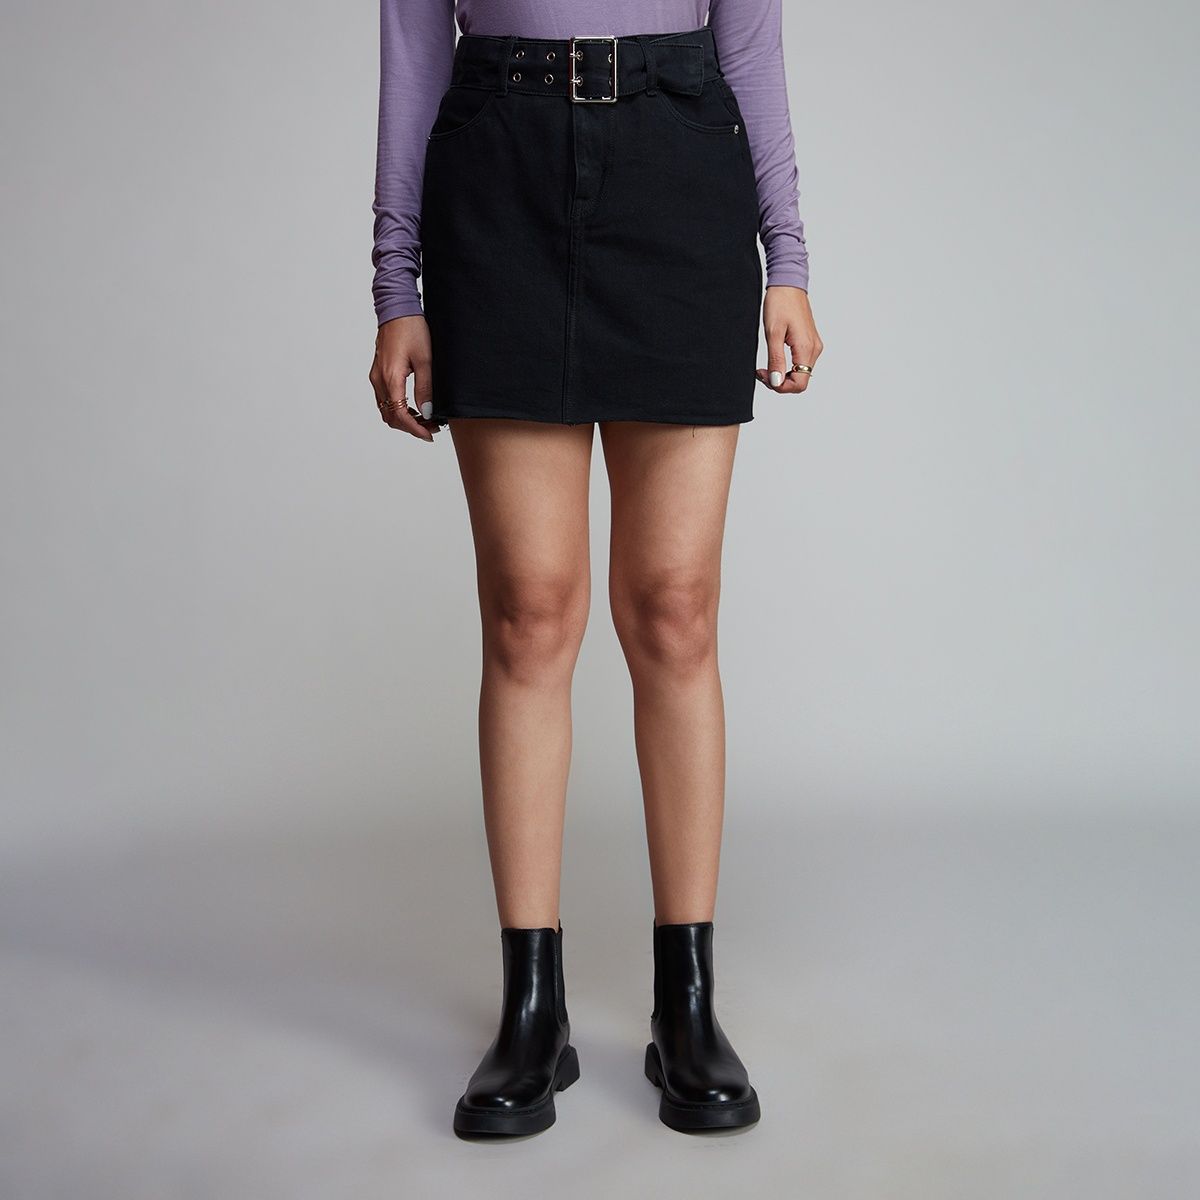 Acne Studios - Denim skirt - Black